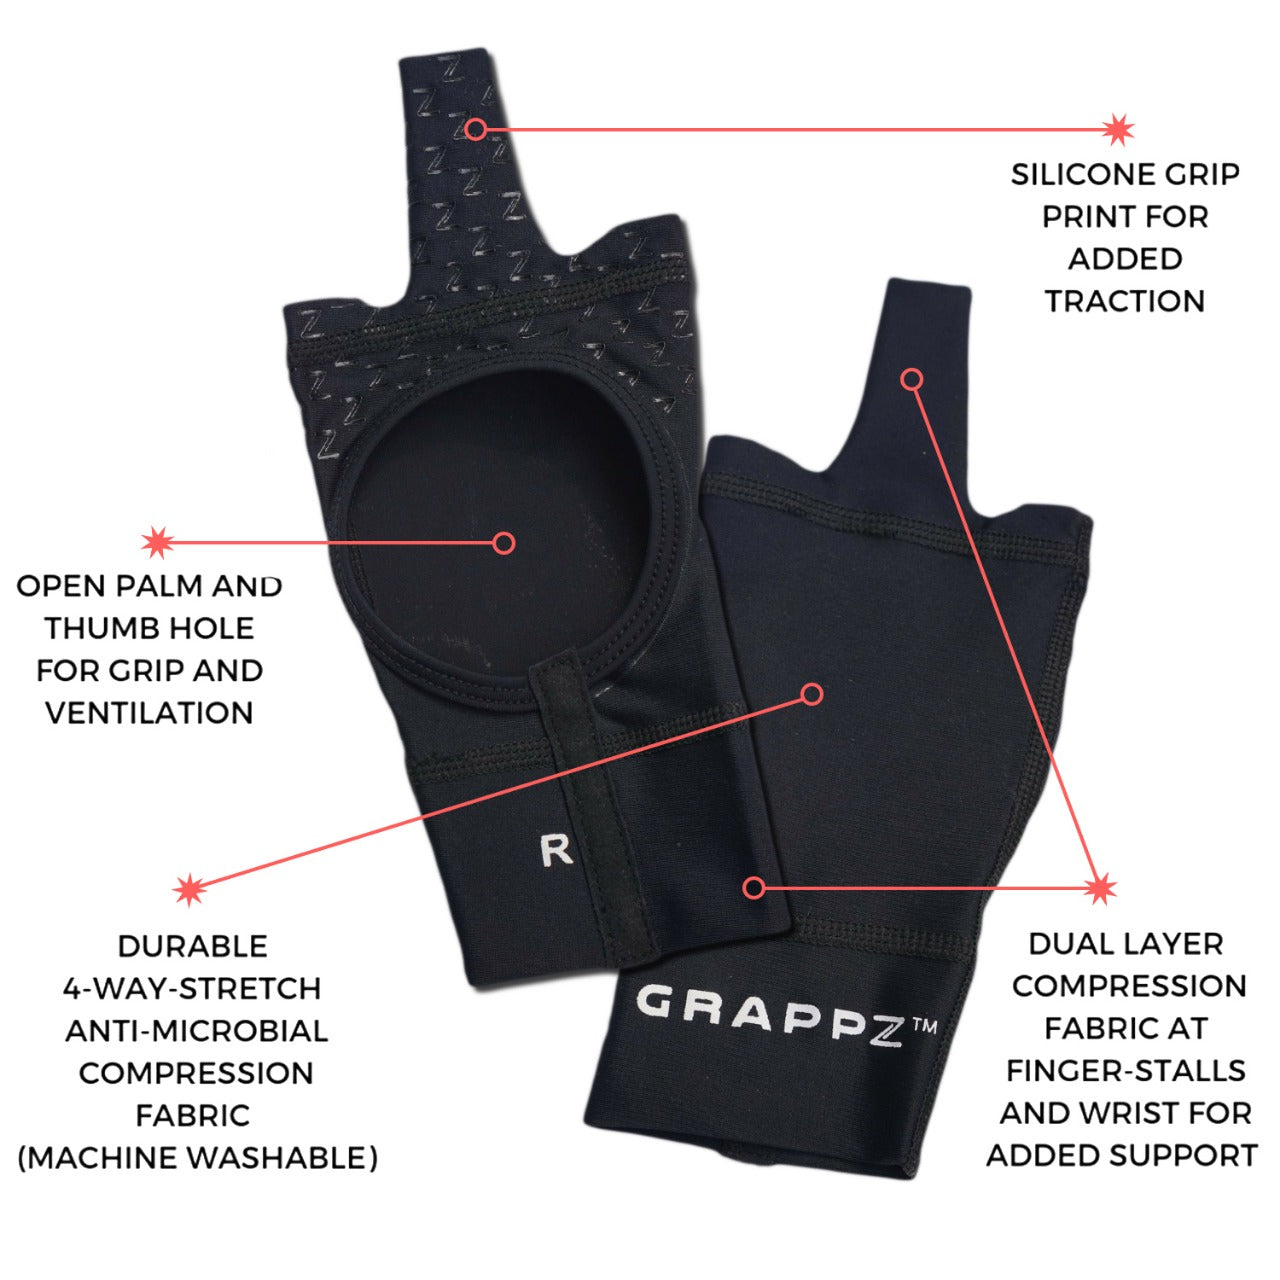 Finger Tape Alternative Splint Athletic Gloves For BJJ / All Sports - Middle Finger Grappz